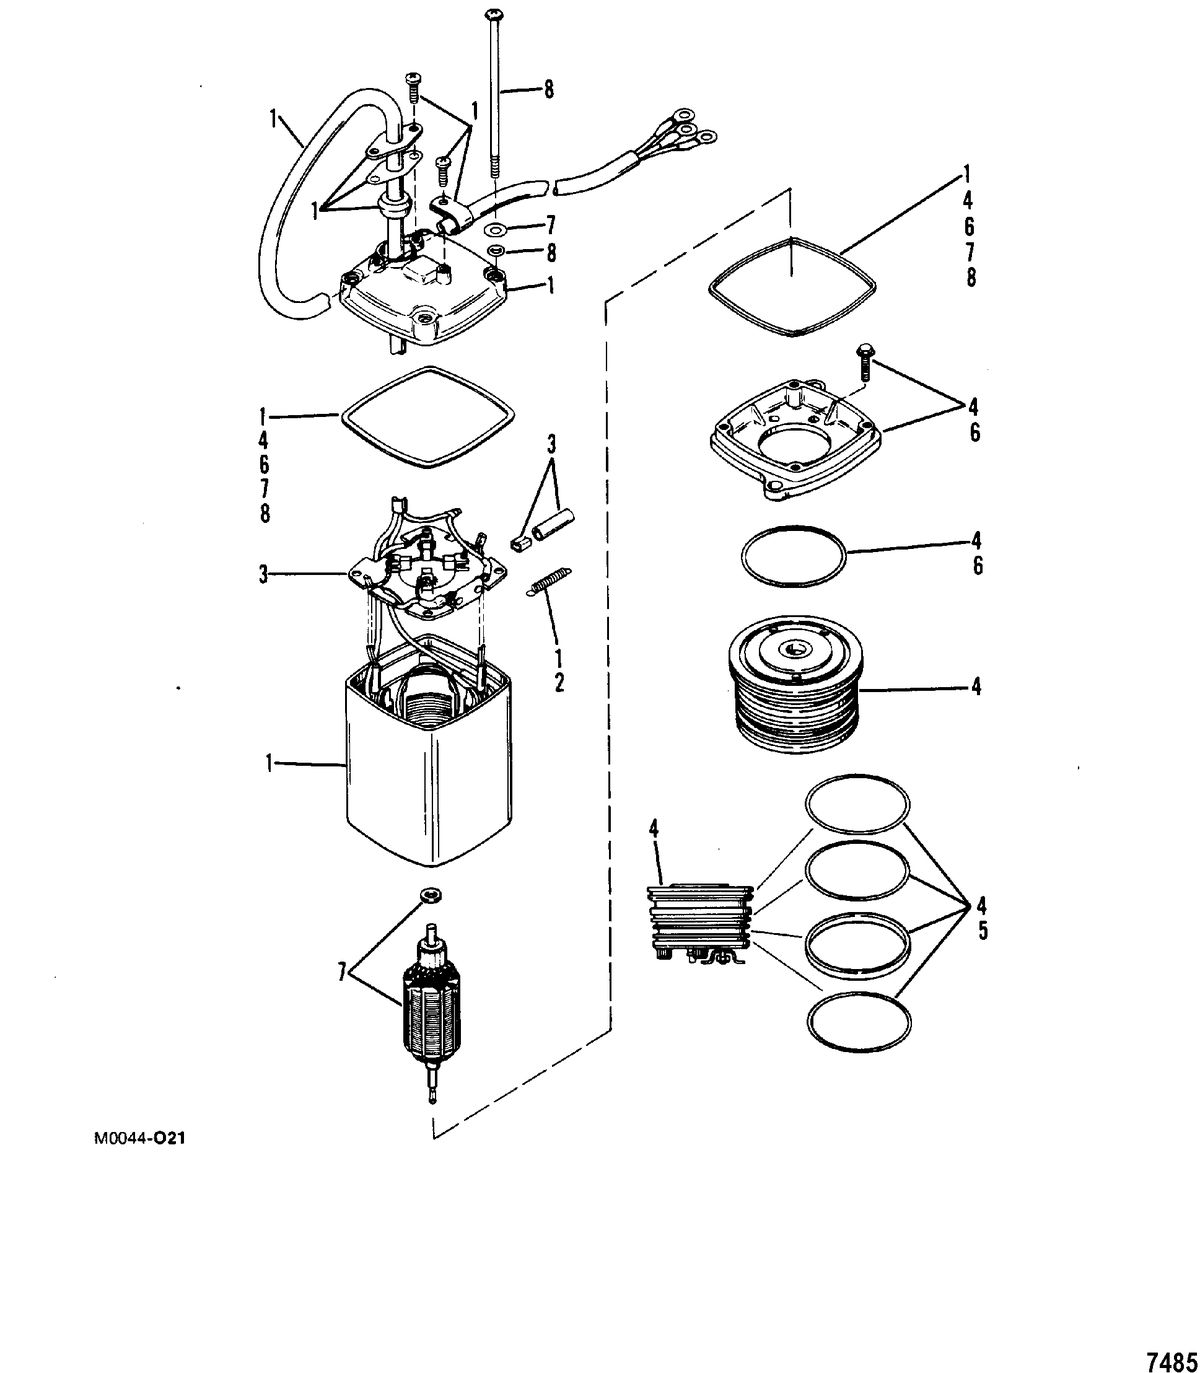 MERCURY/MARINER 90/115 H.P. (INLINE) Power Trim Pump(Eaton Rectangular Motor)